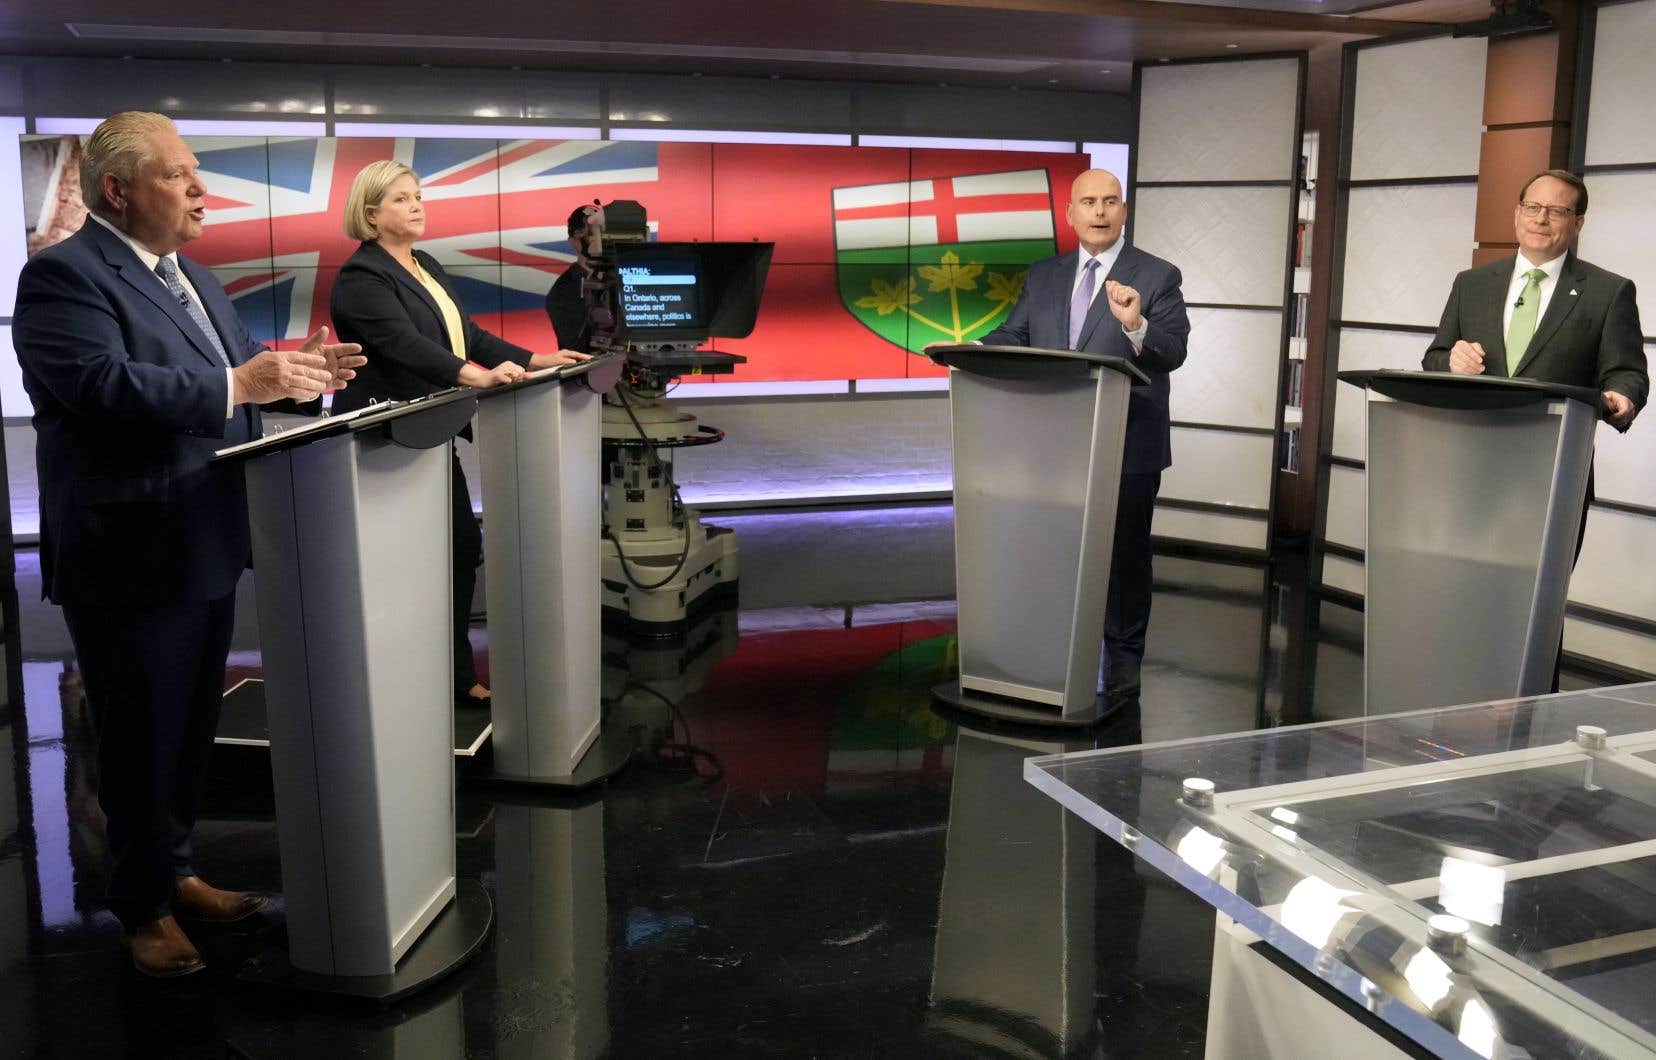 Doug Ford is on the defensive in Ontario's only regional debate

